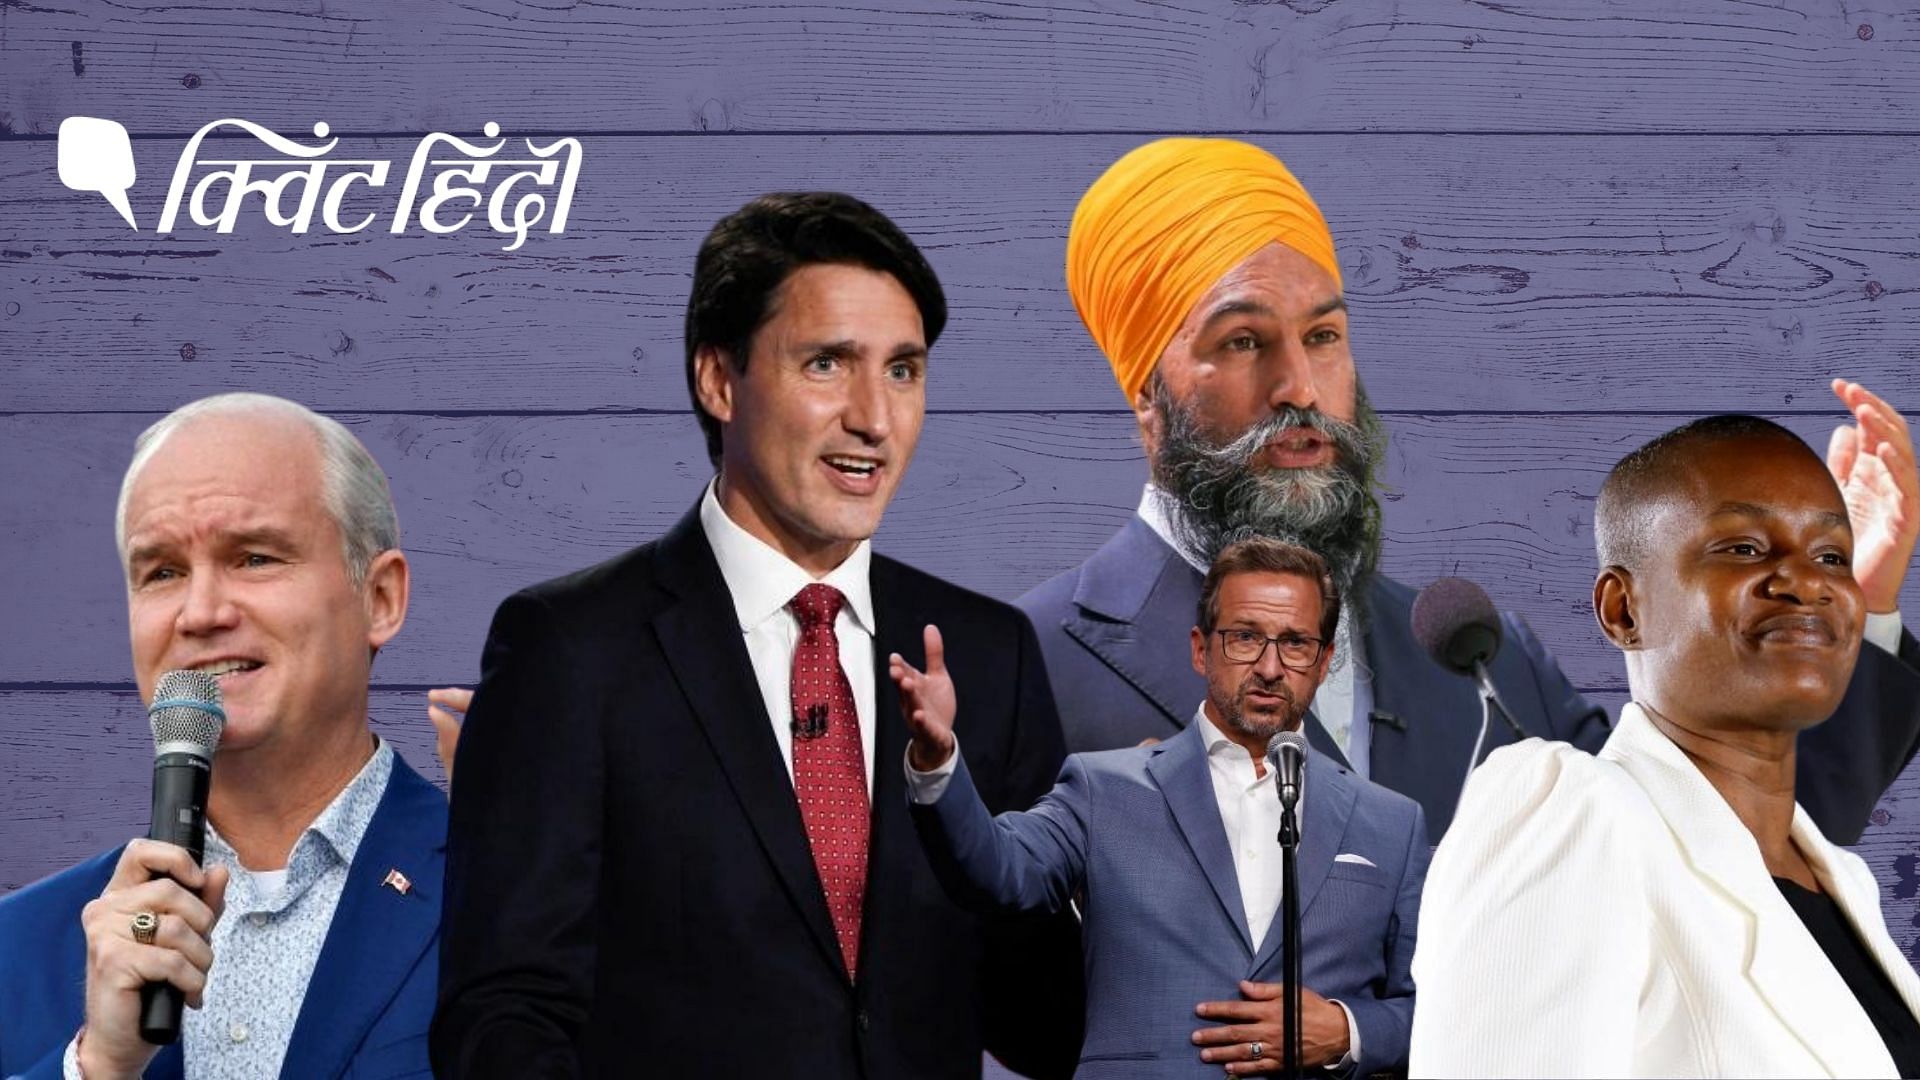 <div class="paragraphs"><p>Canada election: कौन होगा कनाडा का अगला PM</p></div>